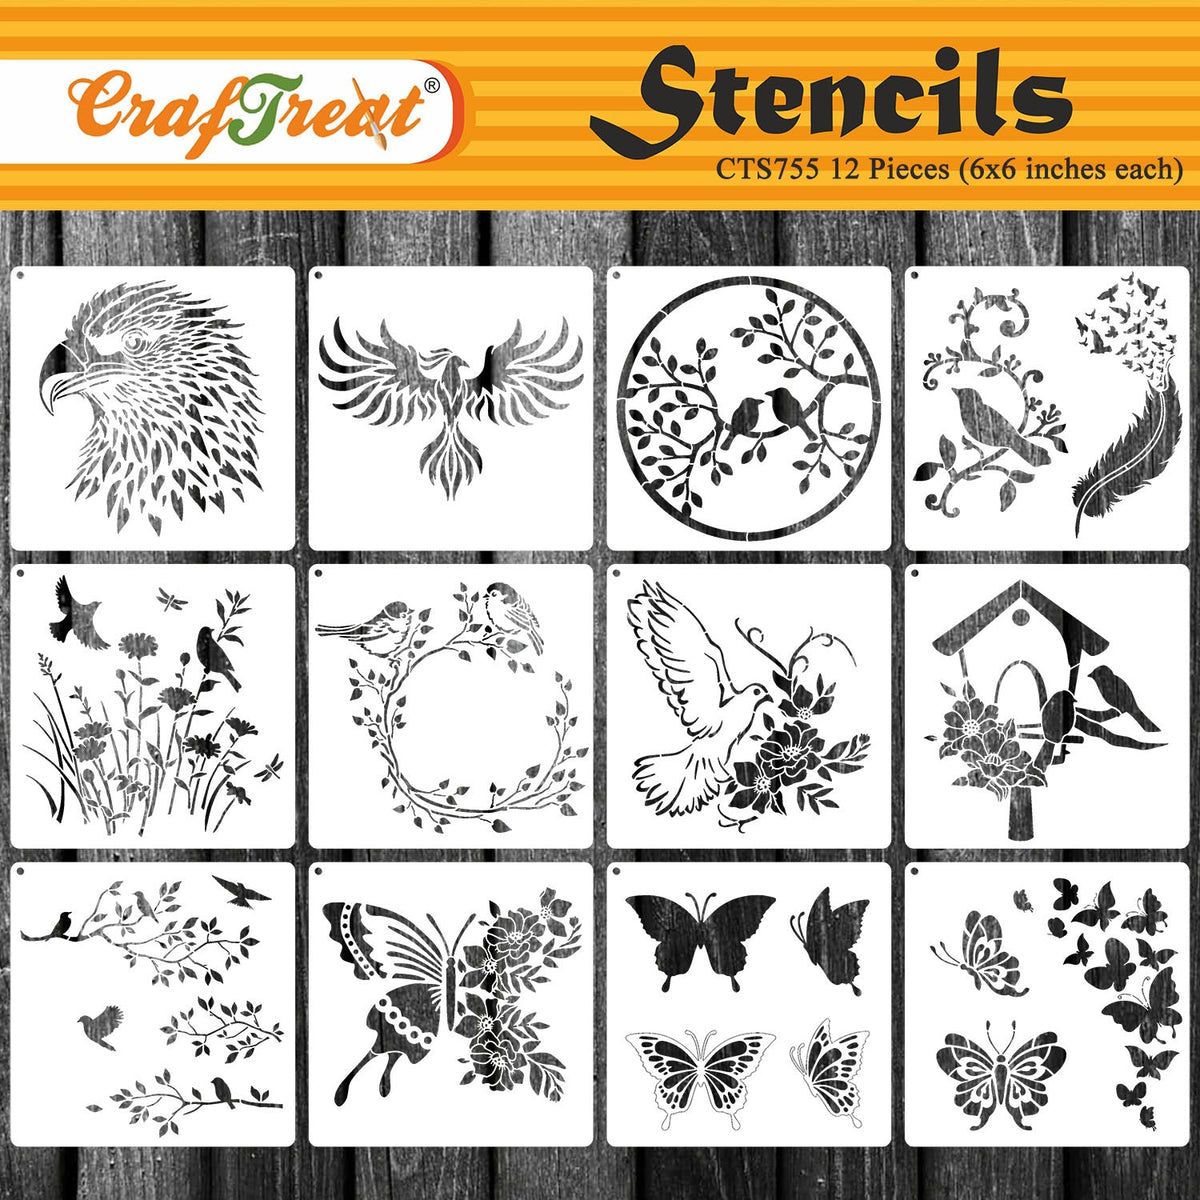 Self Adhesive Airbrush Tattoo Stencil Set Book of 20 Bird Designs Templates